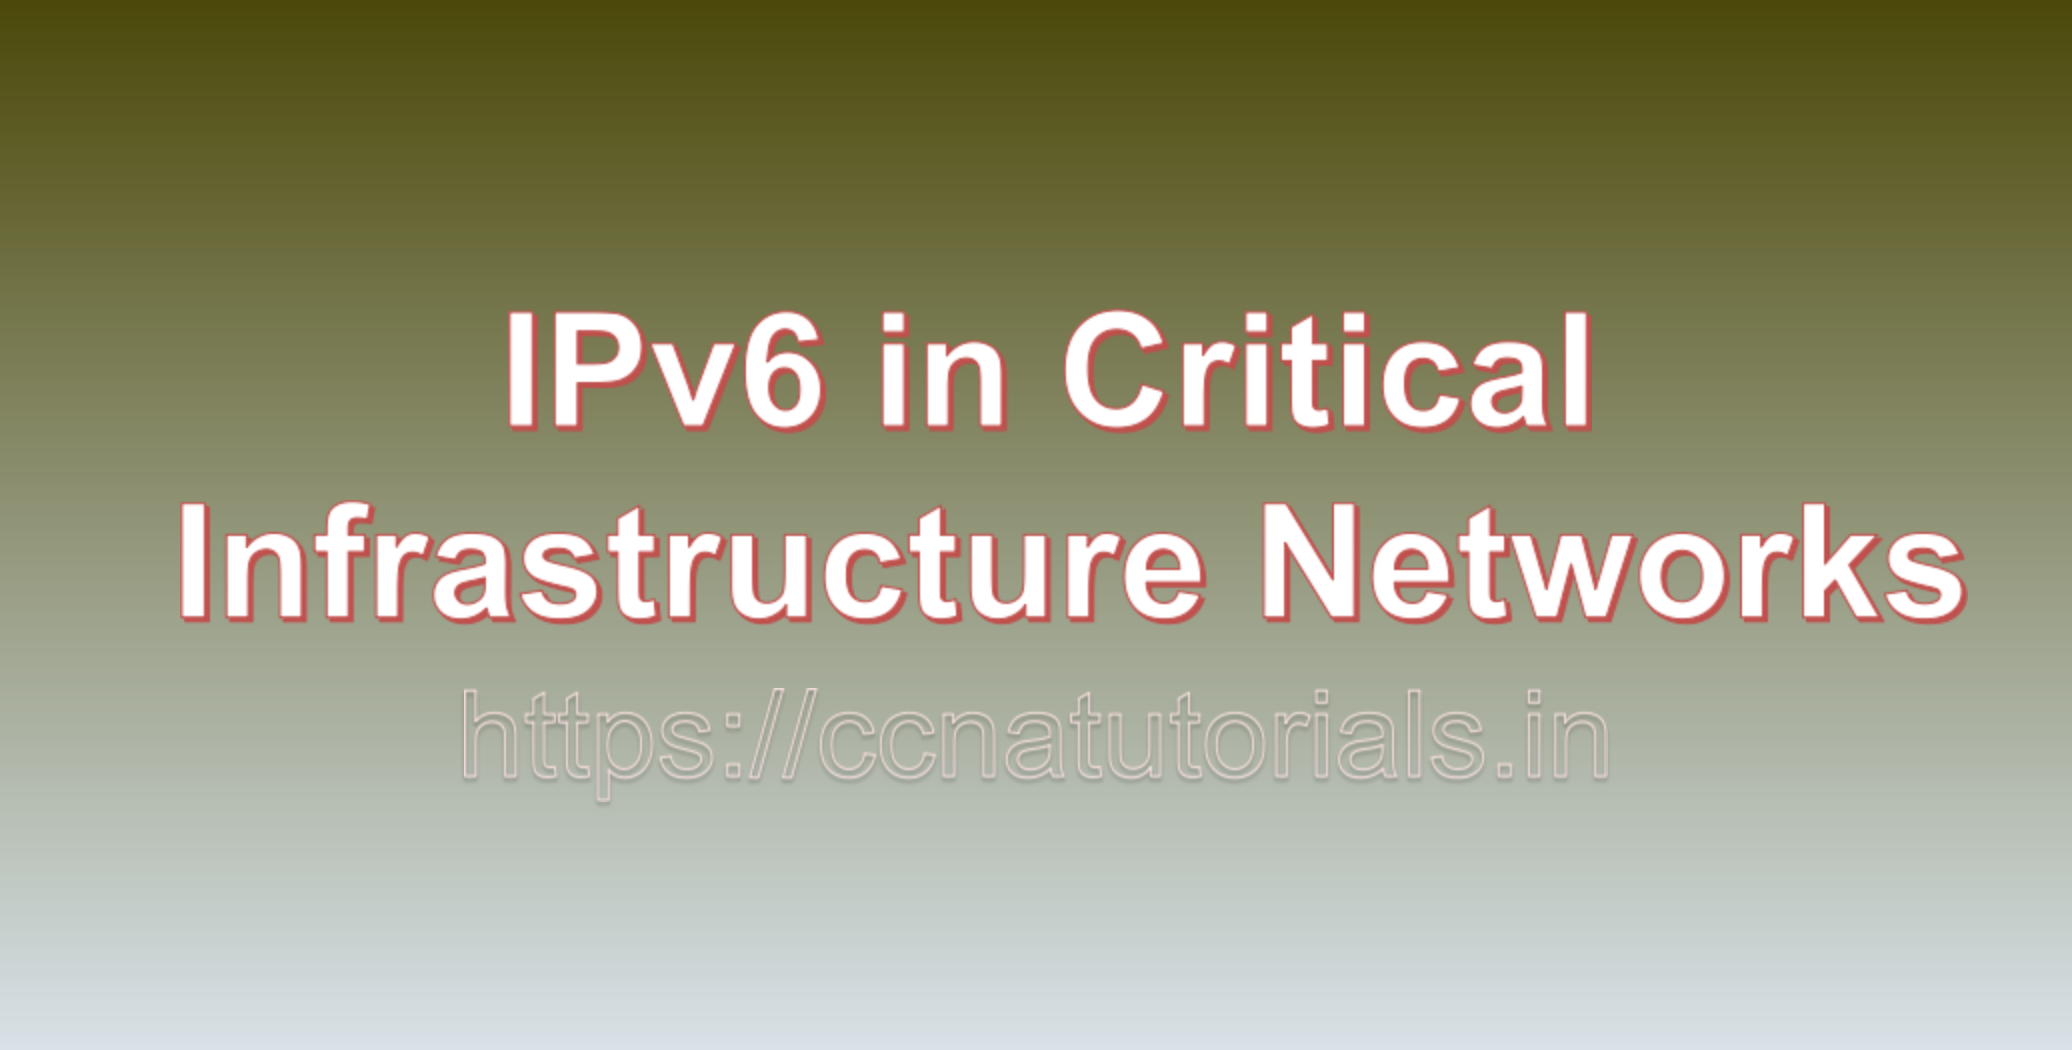 IPv6 in Critical Infrastructure Networks, ccna, ccna tutorials